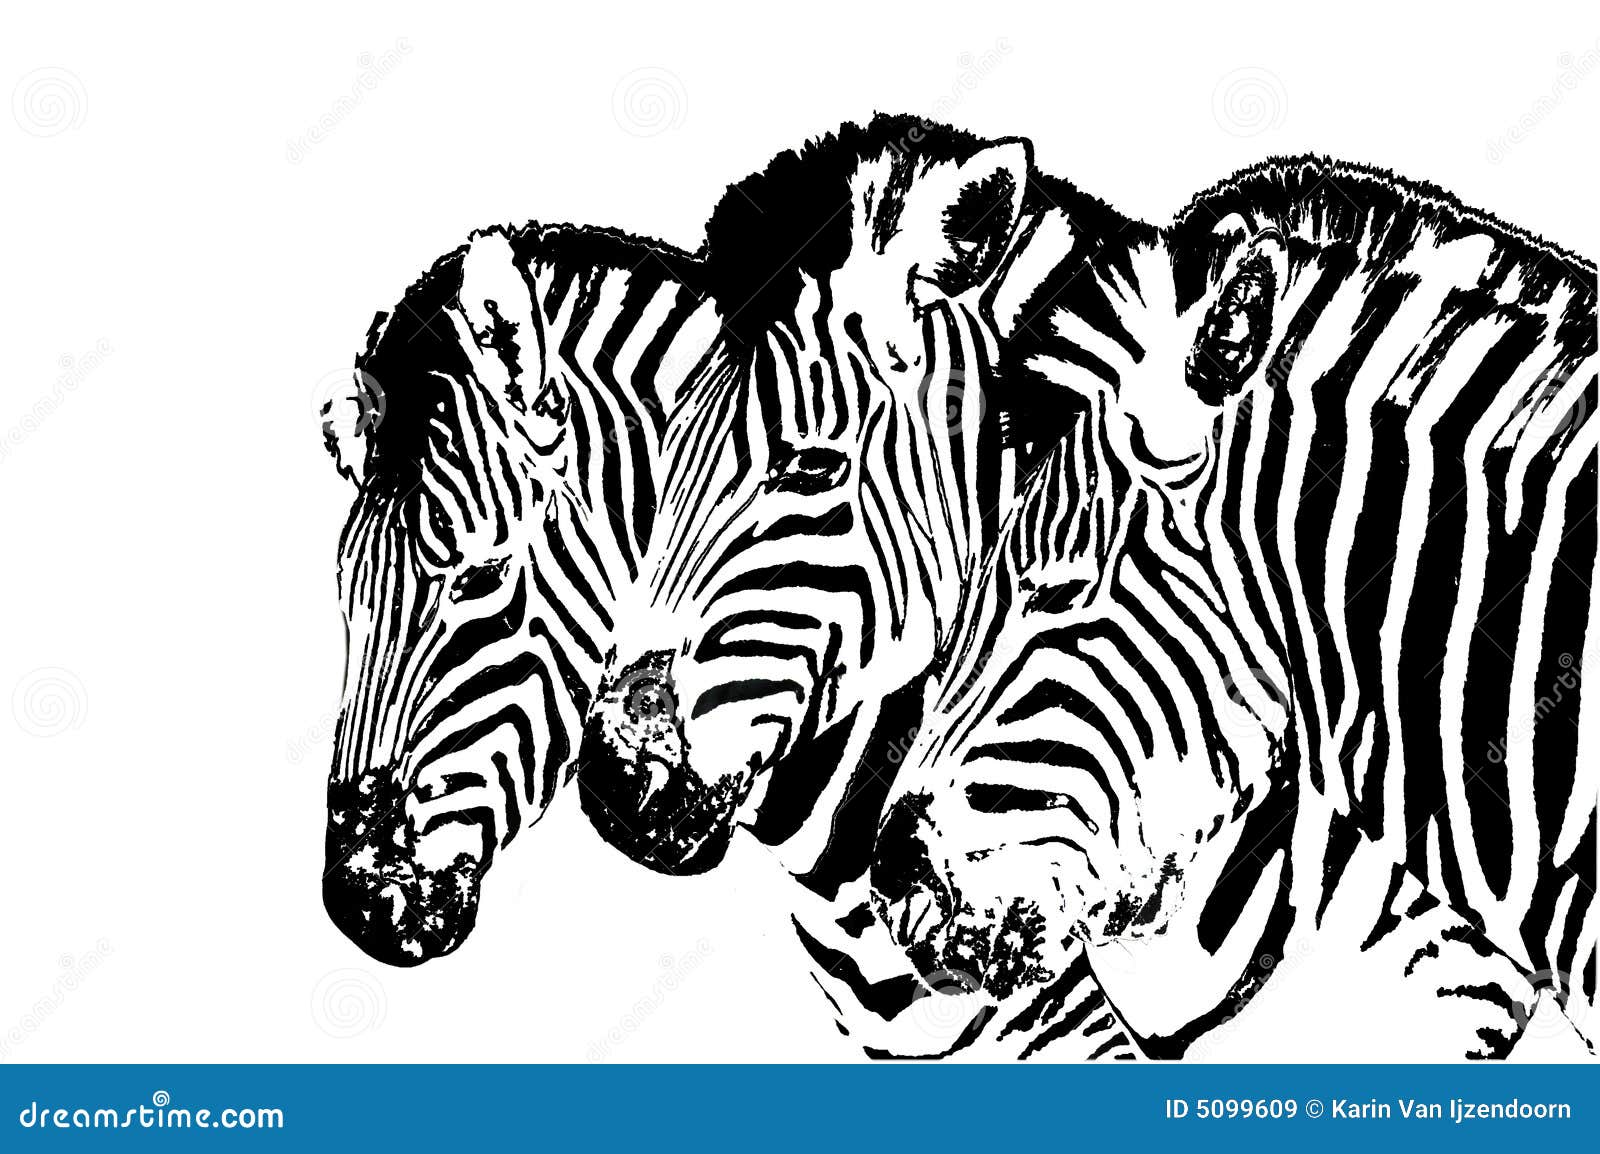 zebra head clipart - photo #47